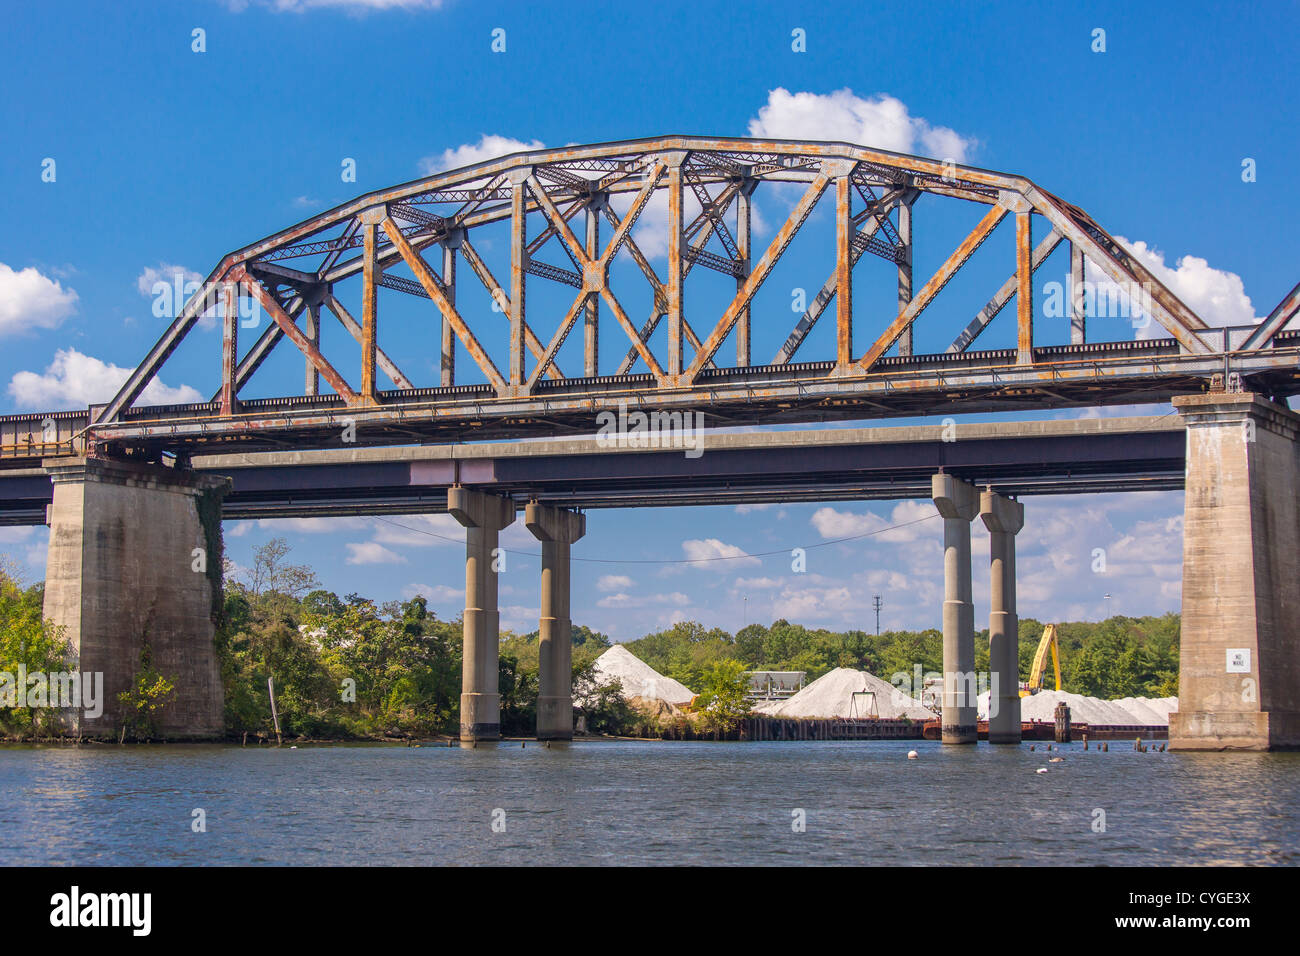 Unsere, VIRGINIA, USA - Eisenbahnbrücke über unsere Fluss. Stockfoto